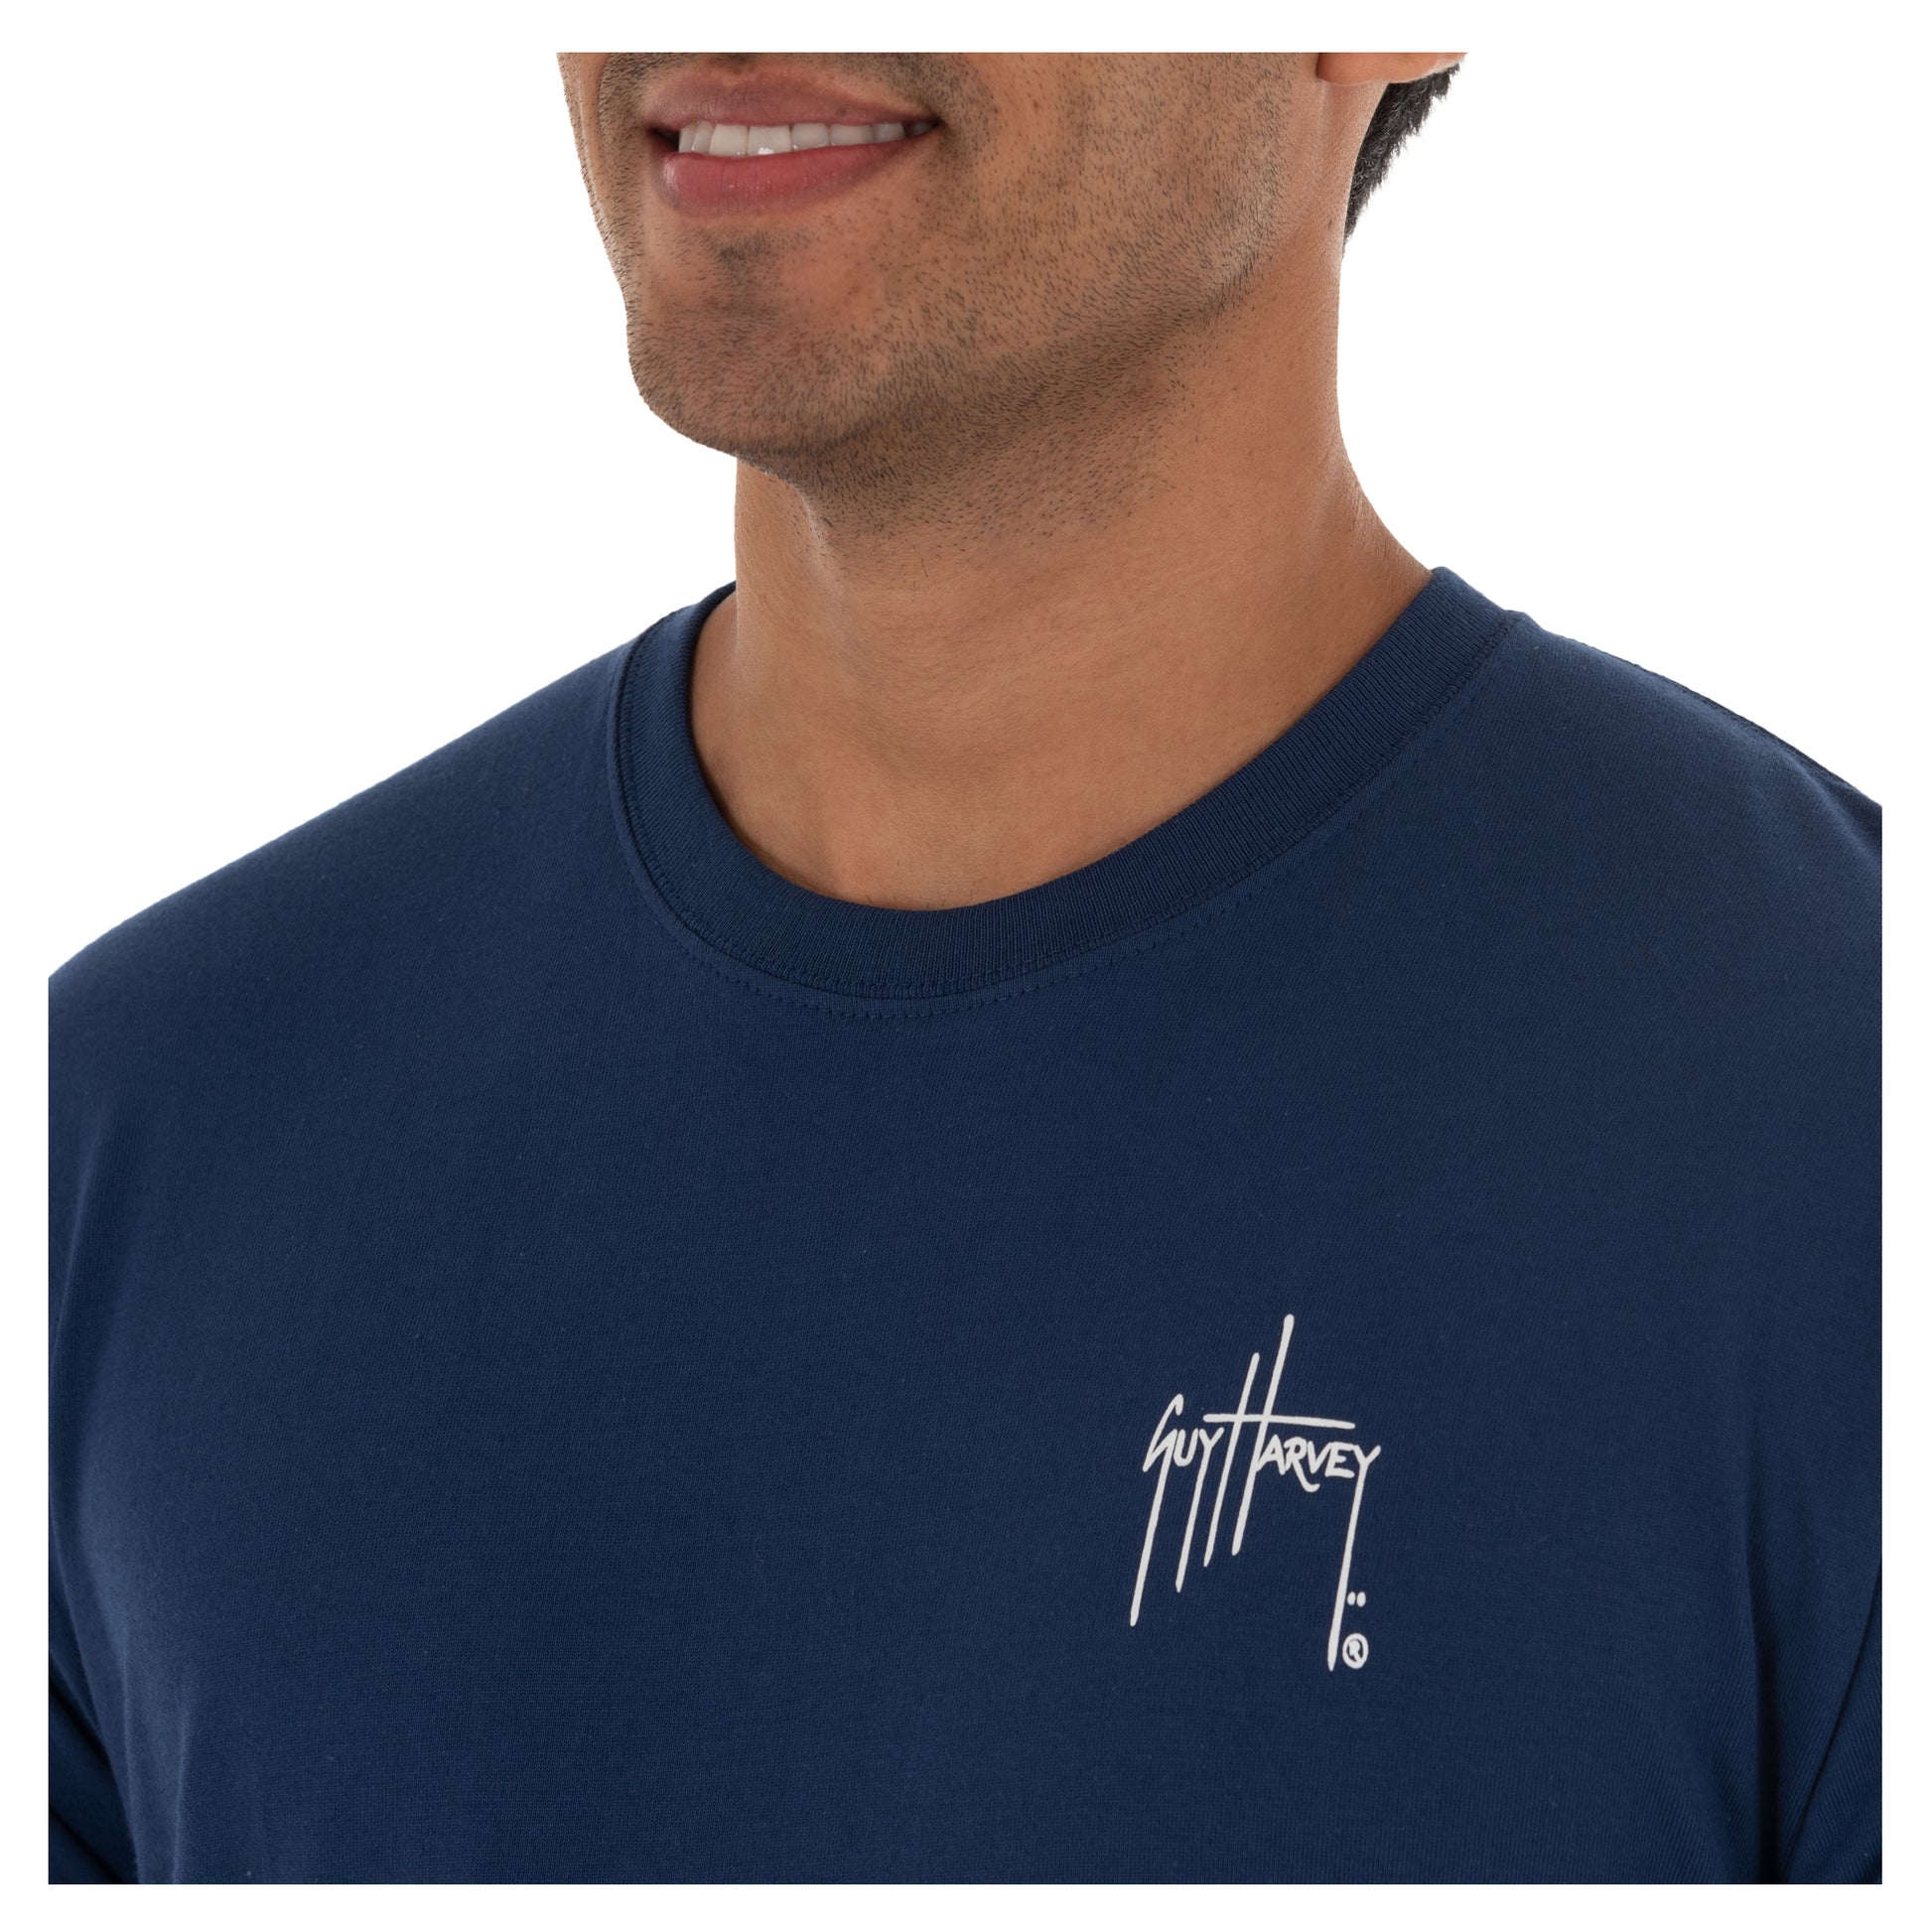 Men's Sportfishing USA Short Sleeve T-Shirt View 4